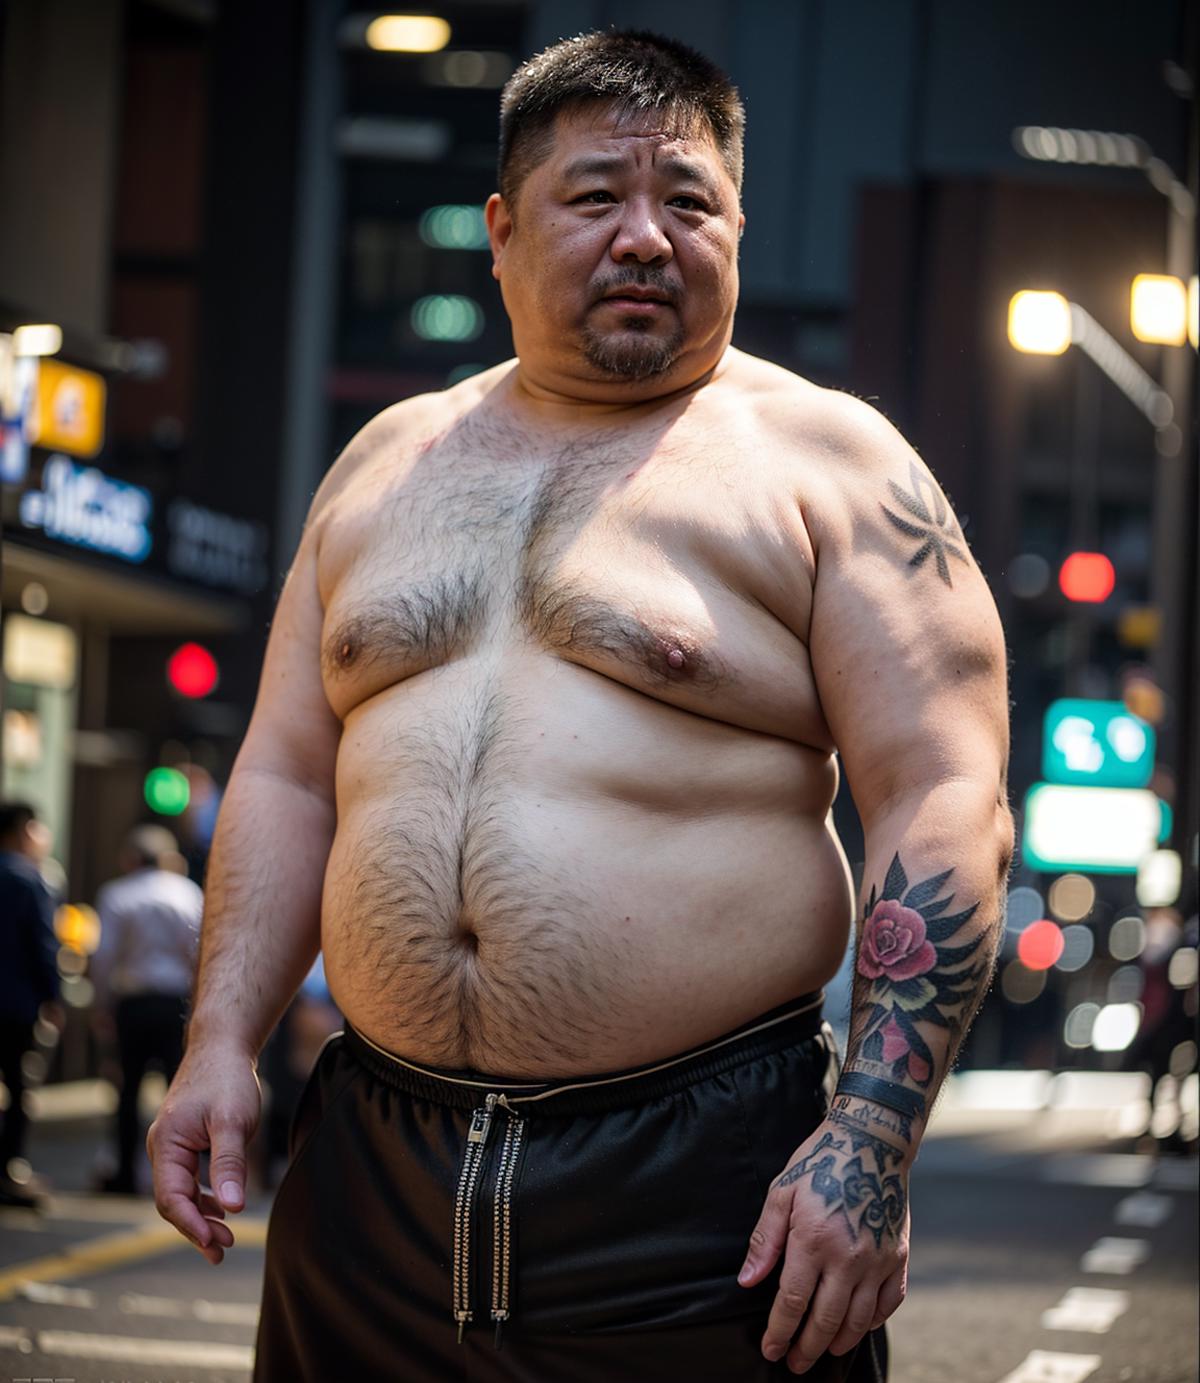 Nude Asian Chubby male (亚洲肥胖男性人体) image by psaska678